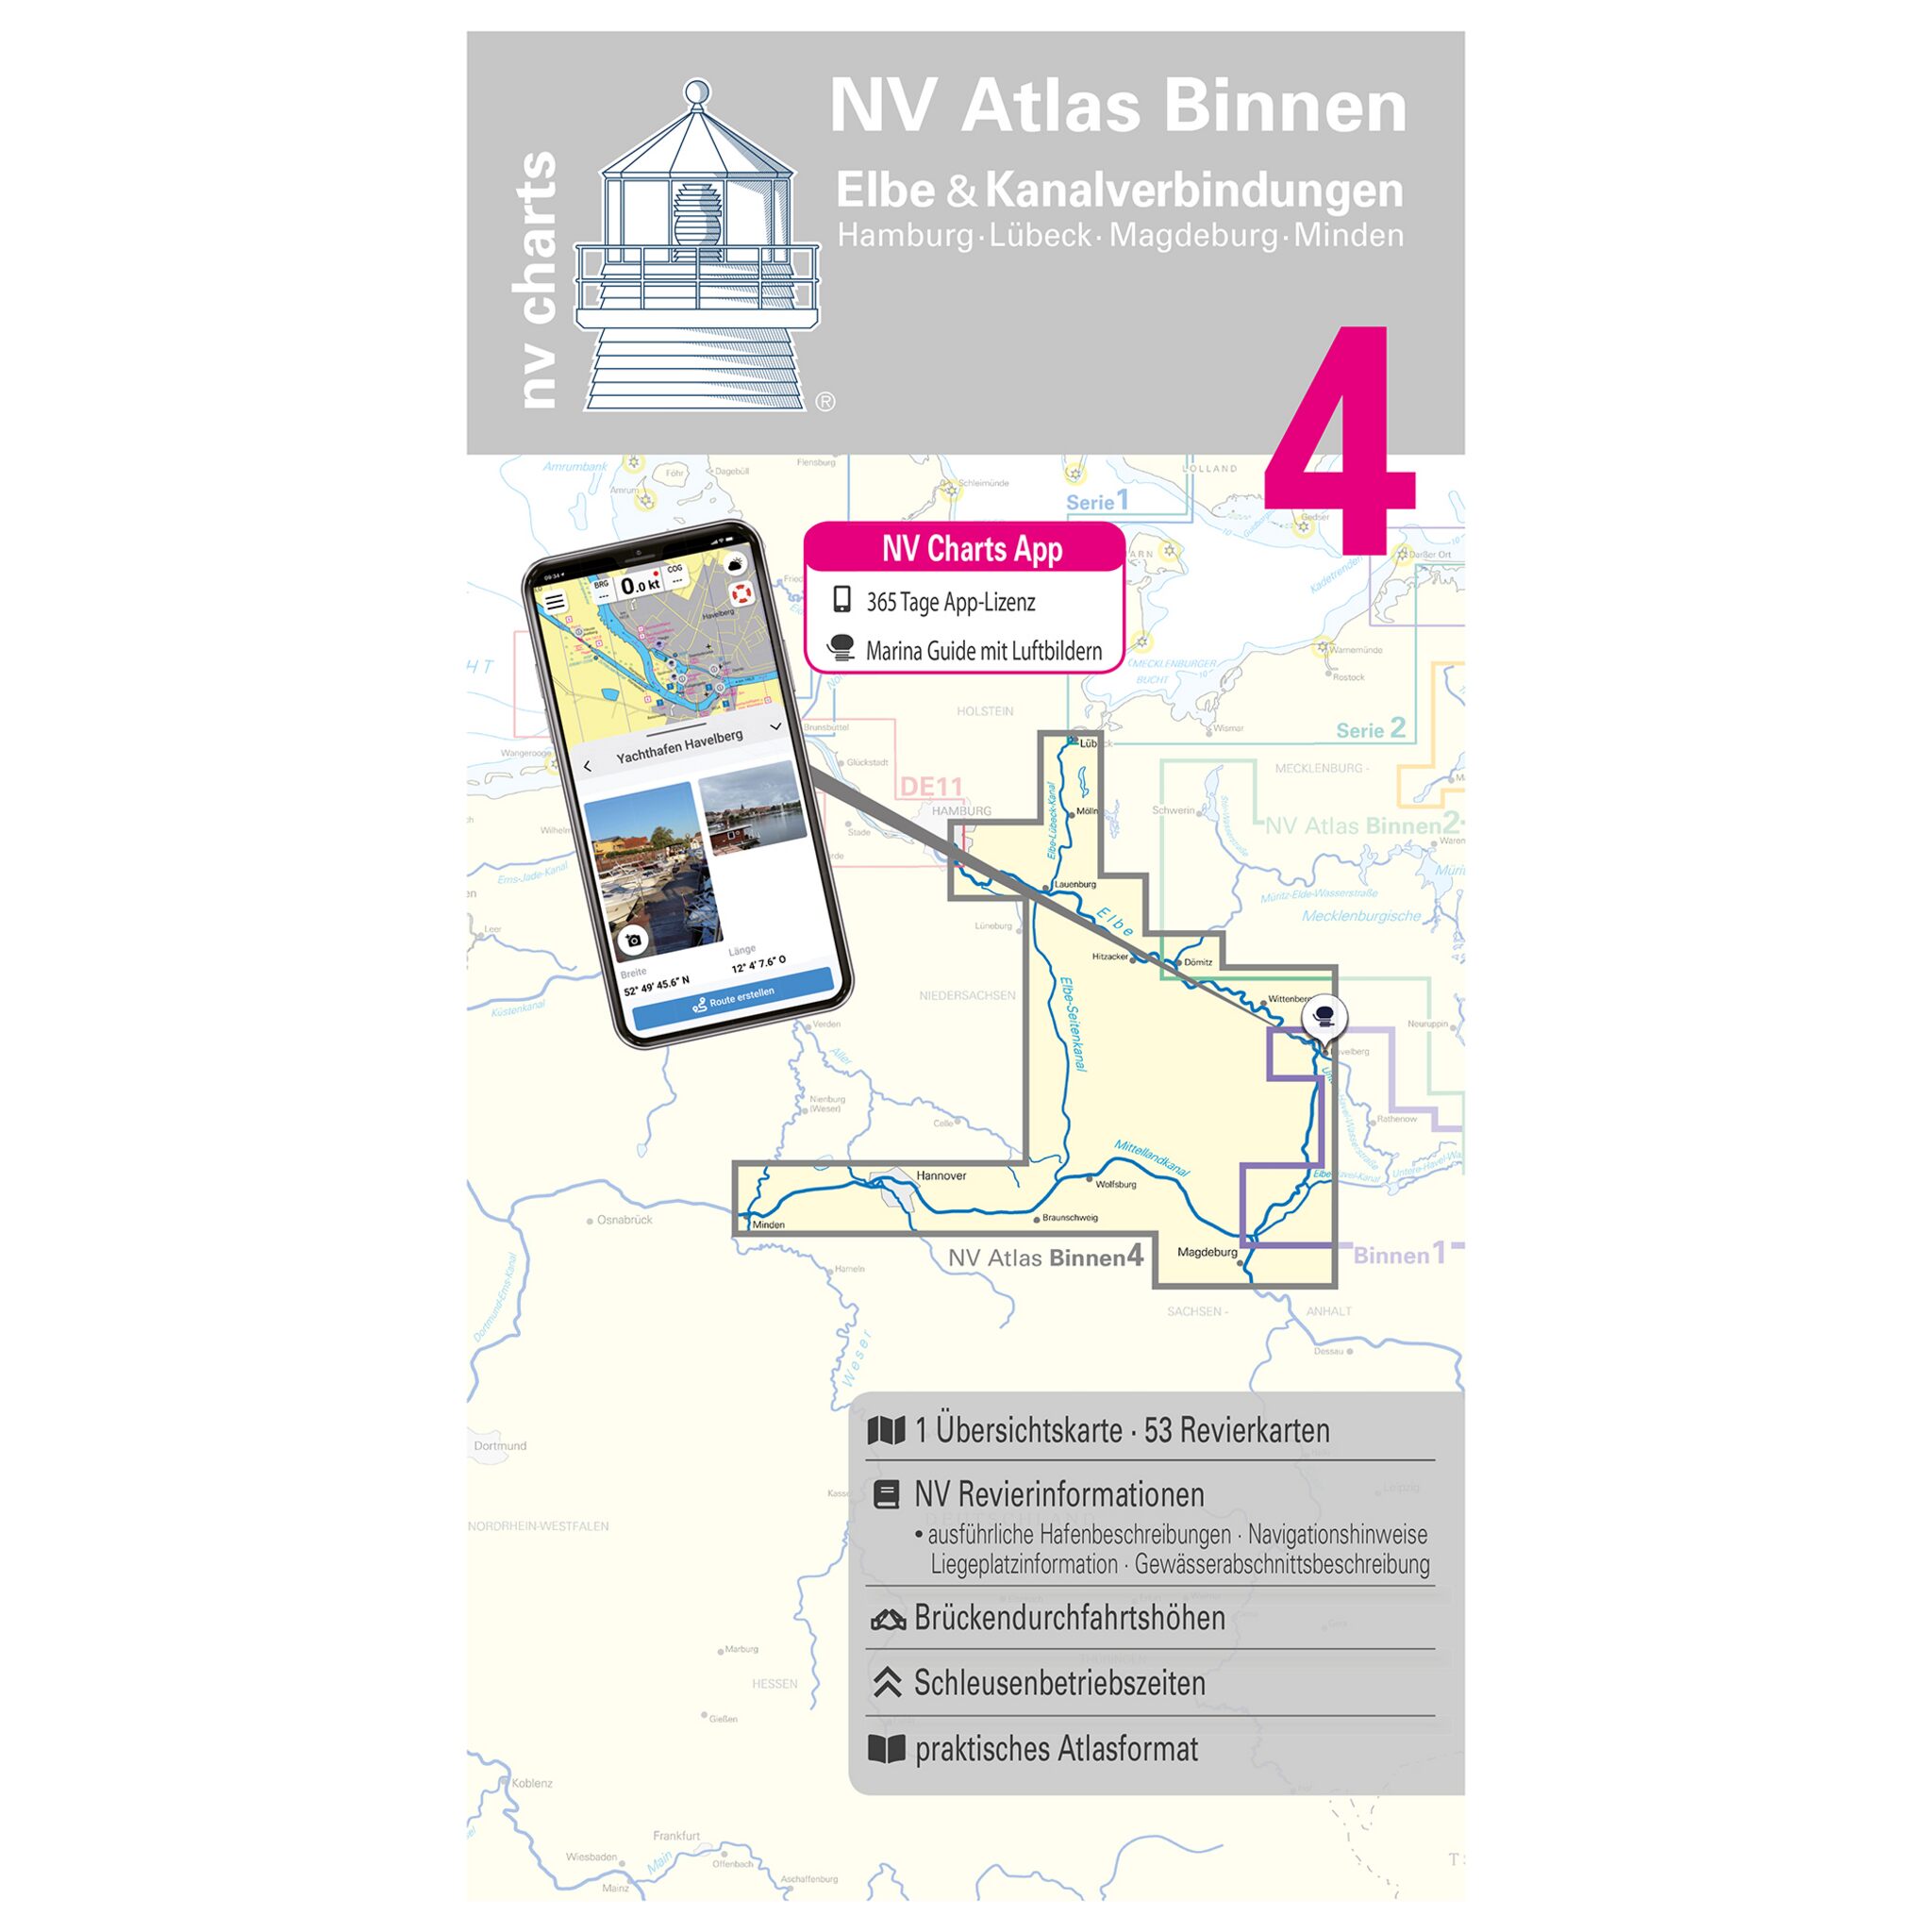 NV Atlas Binnen 4 - Elbe und Kanalverbindugen